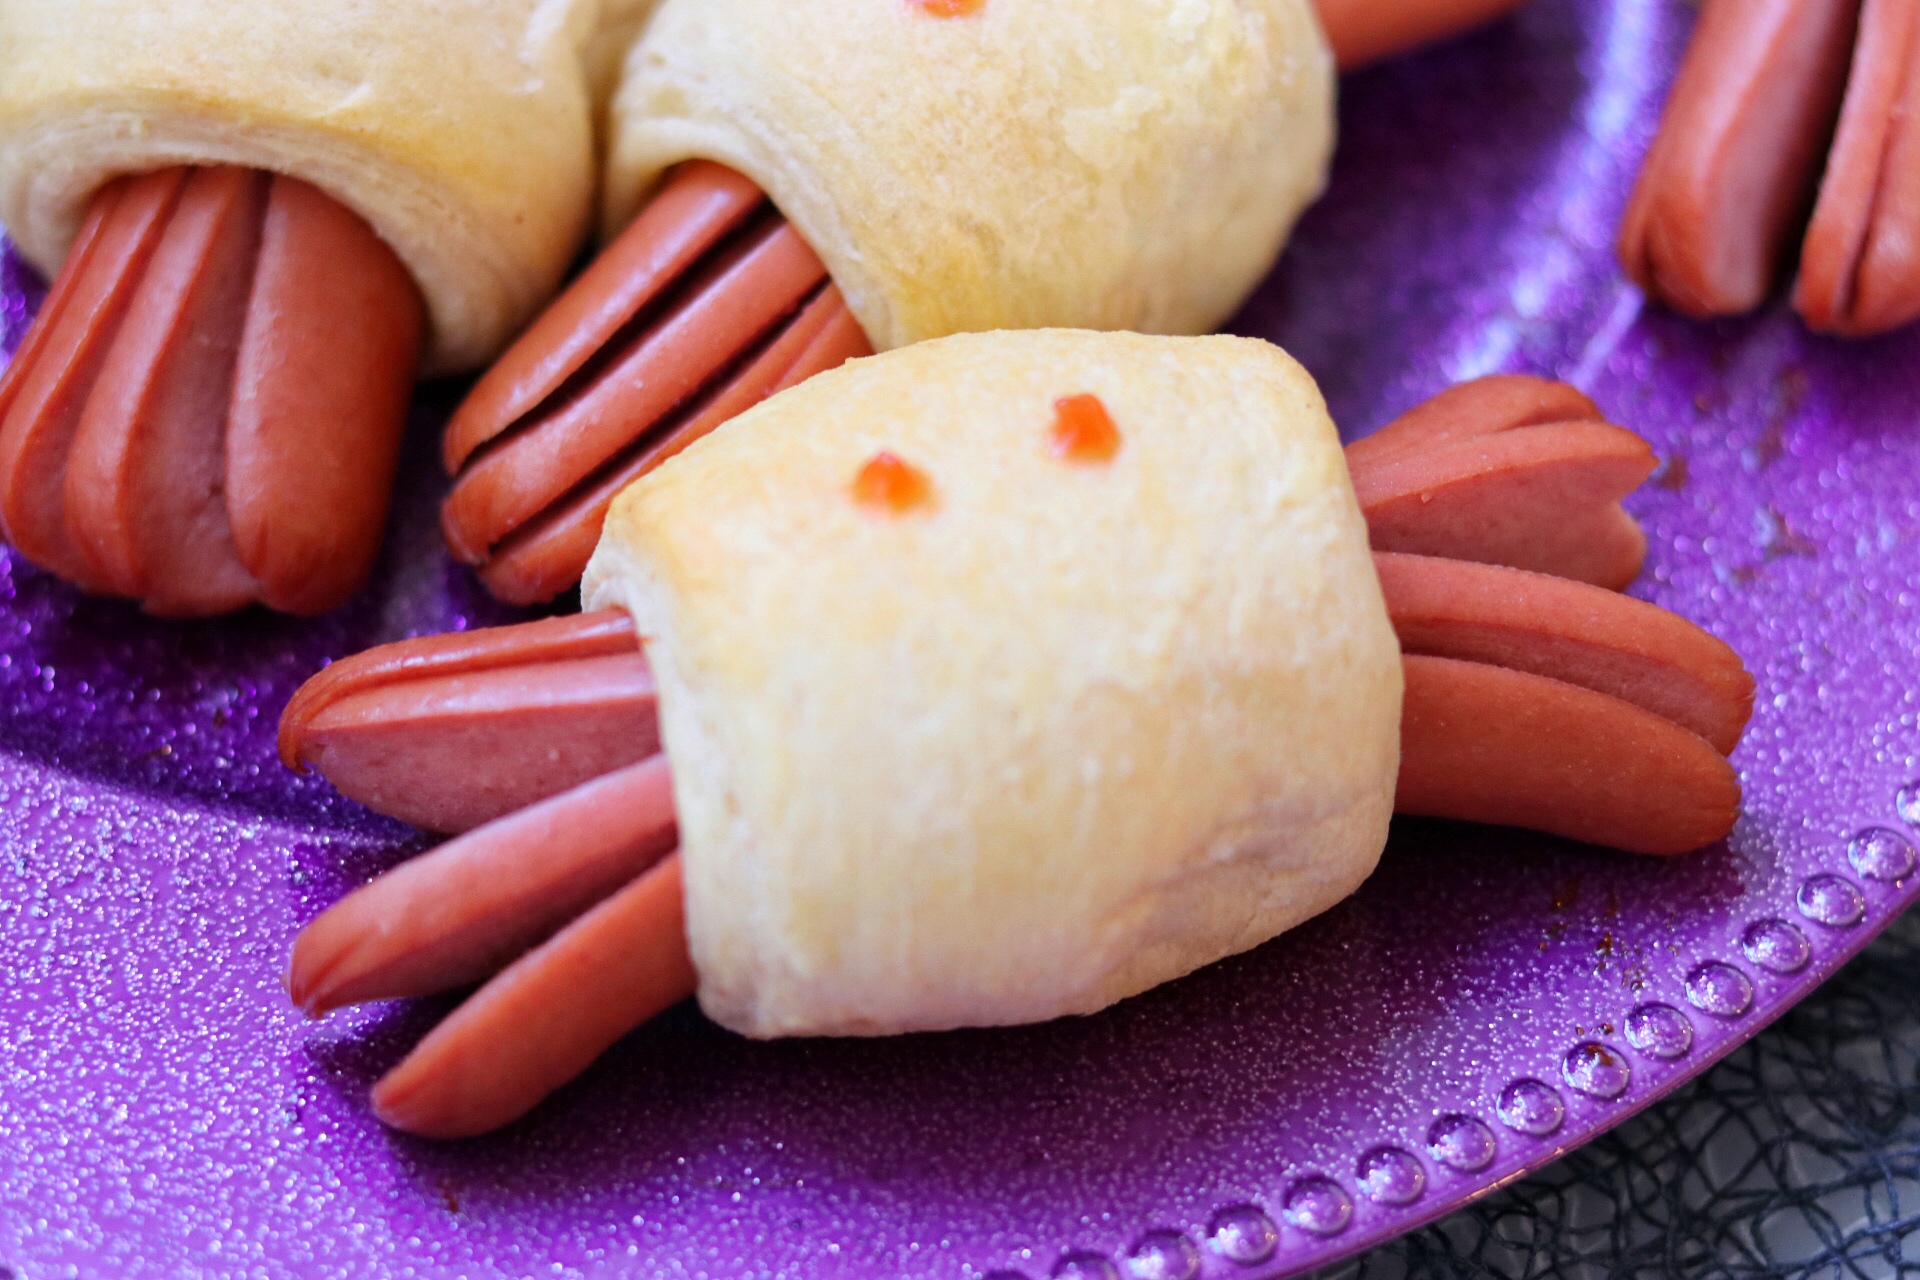 spider hot dog recipe for Halloween